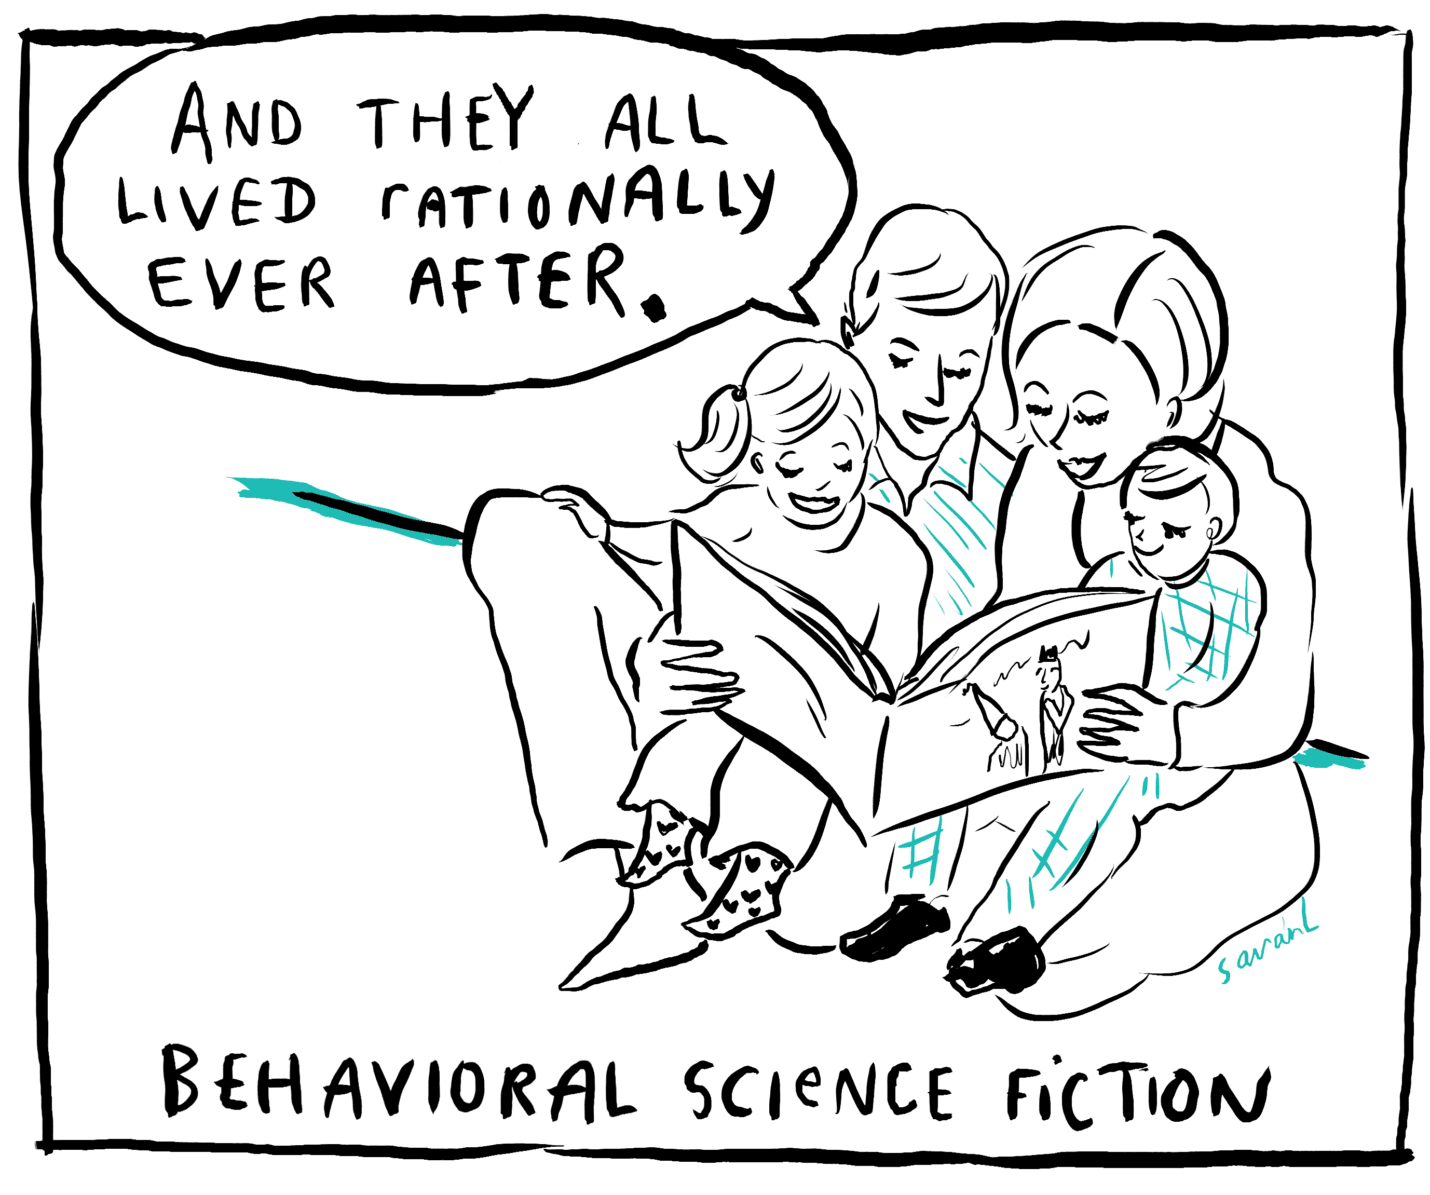 Cartoons Archive - Behavioral Scientist